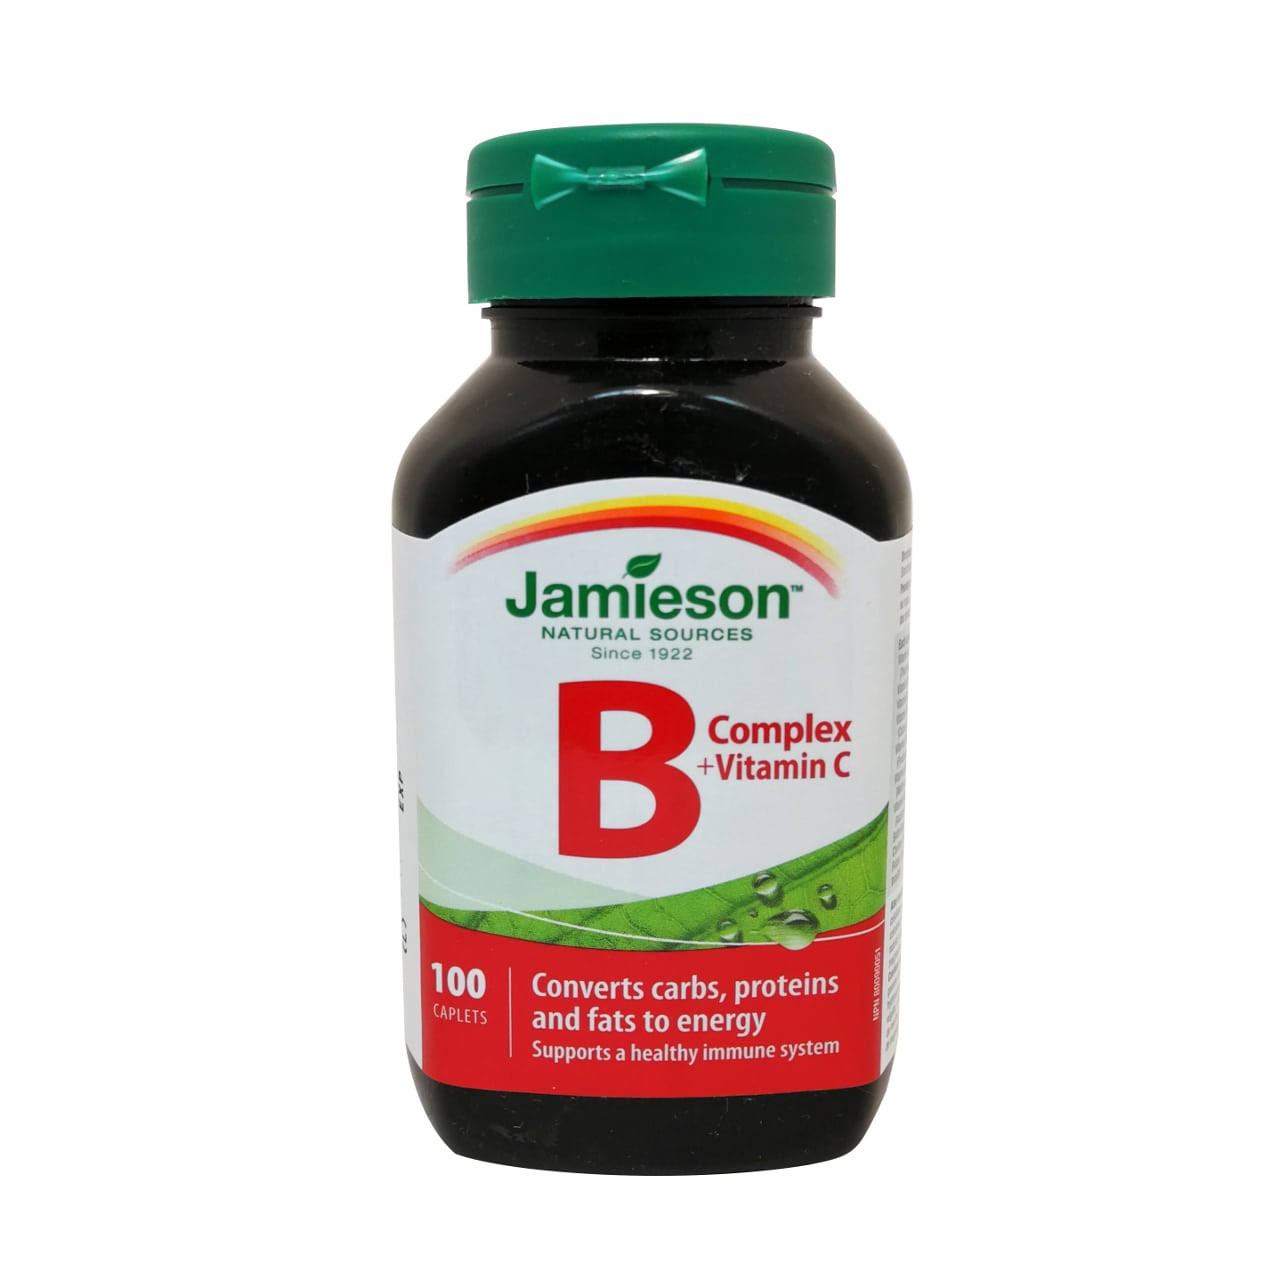 Jamieson B Complex + Vitamin C (100 caplets)